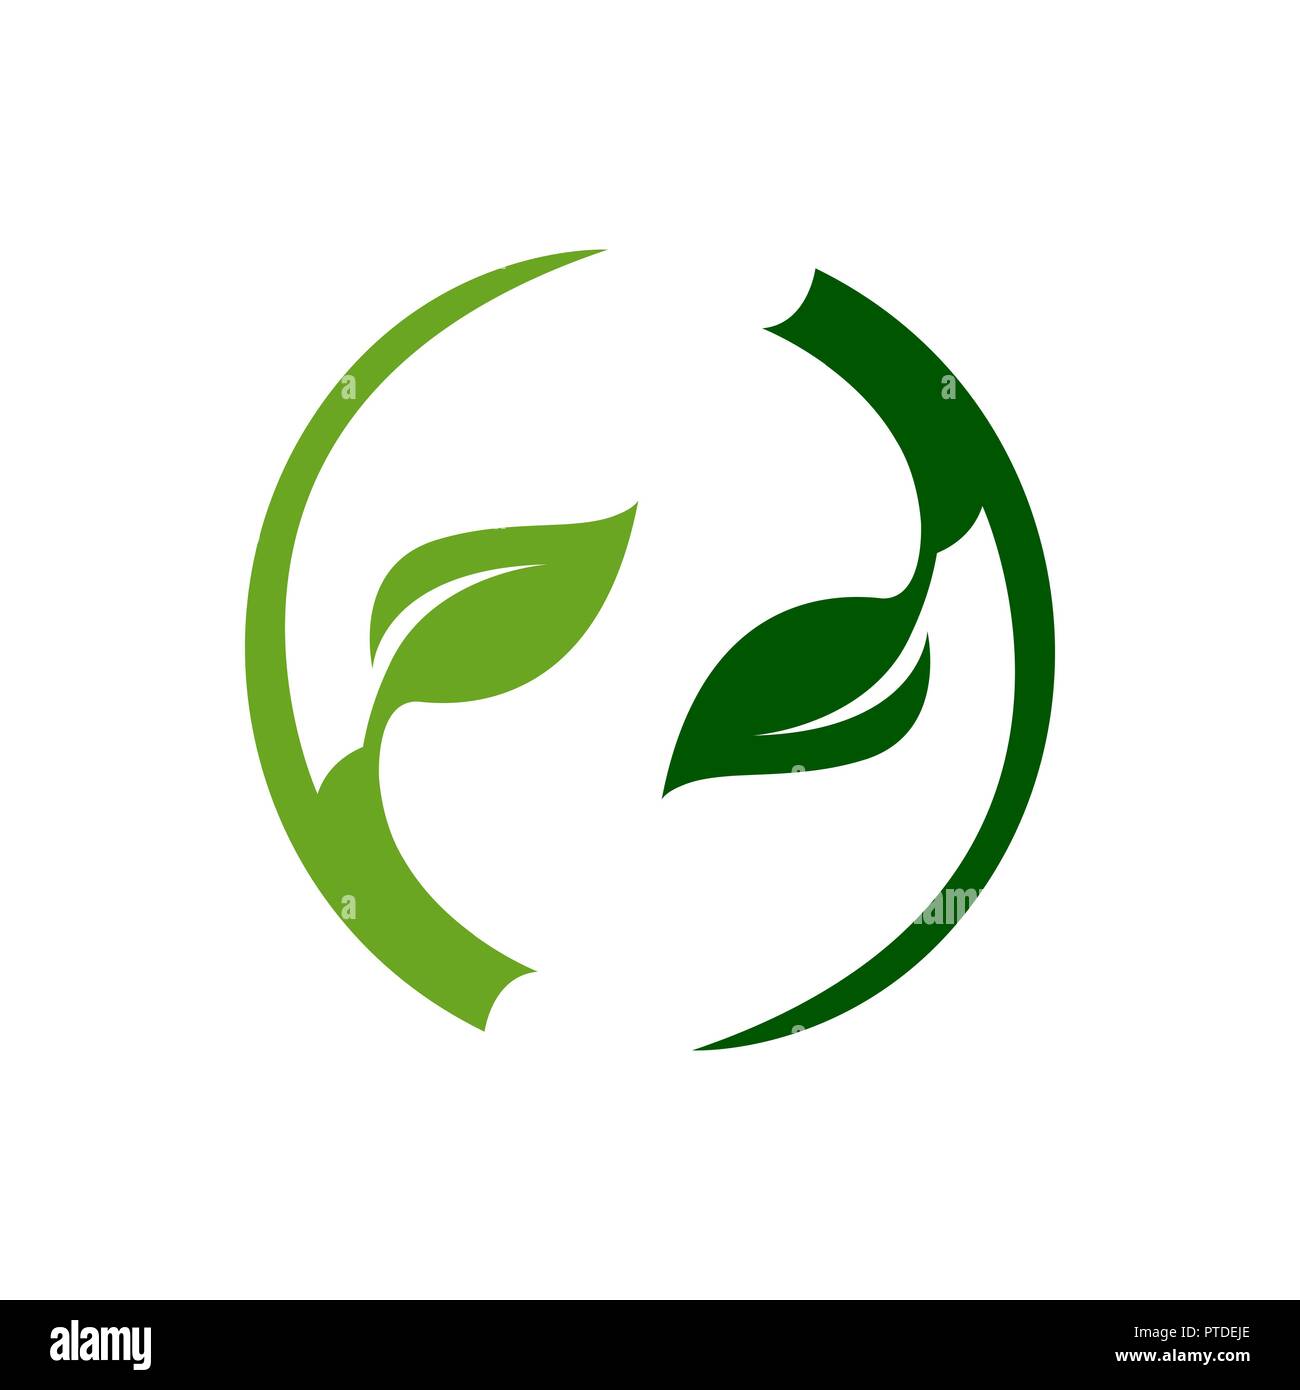 Abstrakte Kreis grünes Licht dunkel Leaf logo Vorlage Stock Vektor